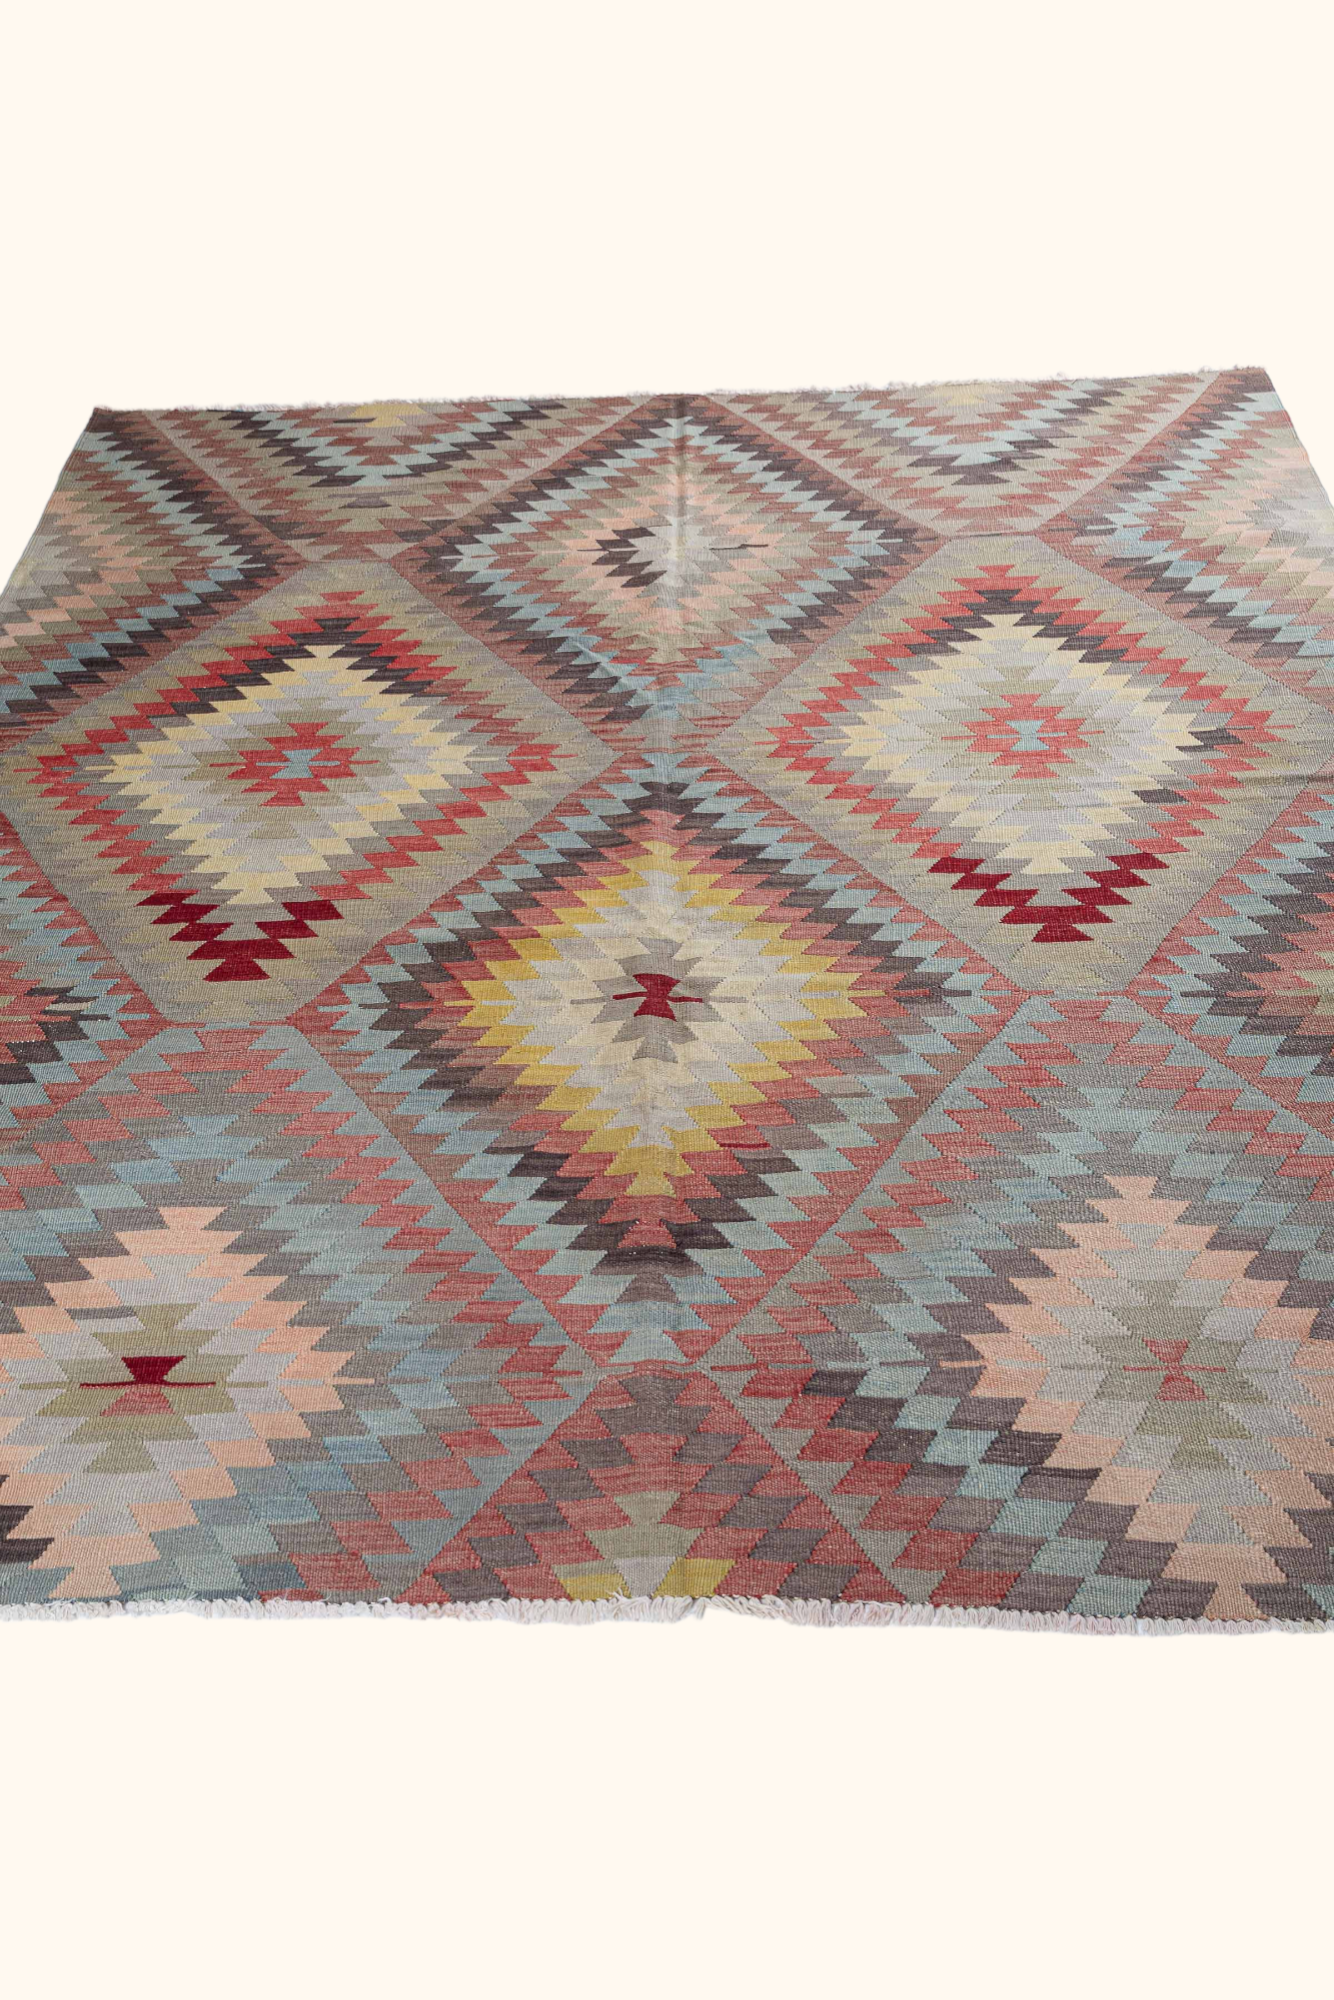 USAK Vintage Kelim rug 245x191cm